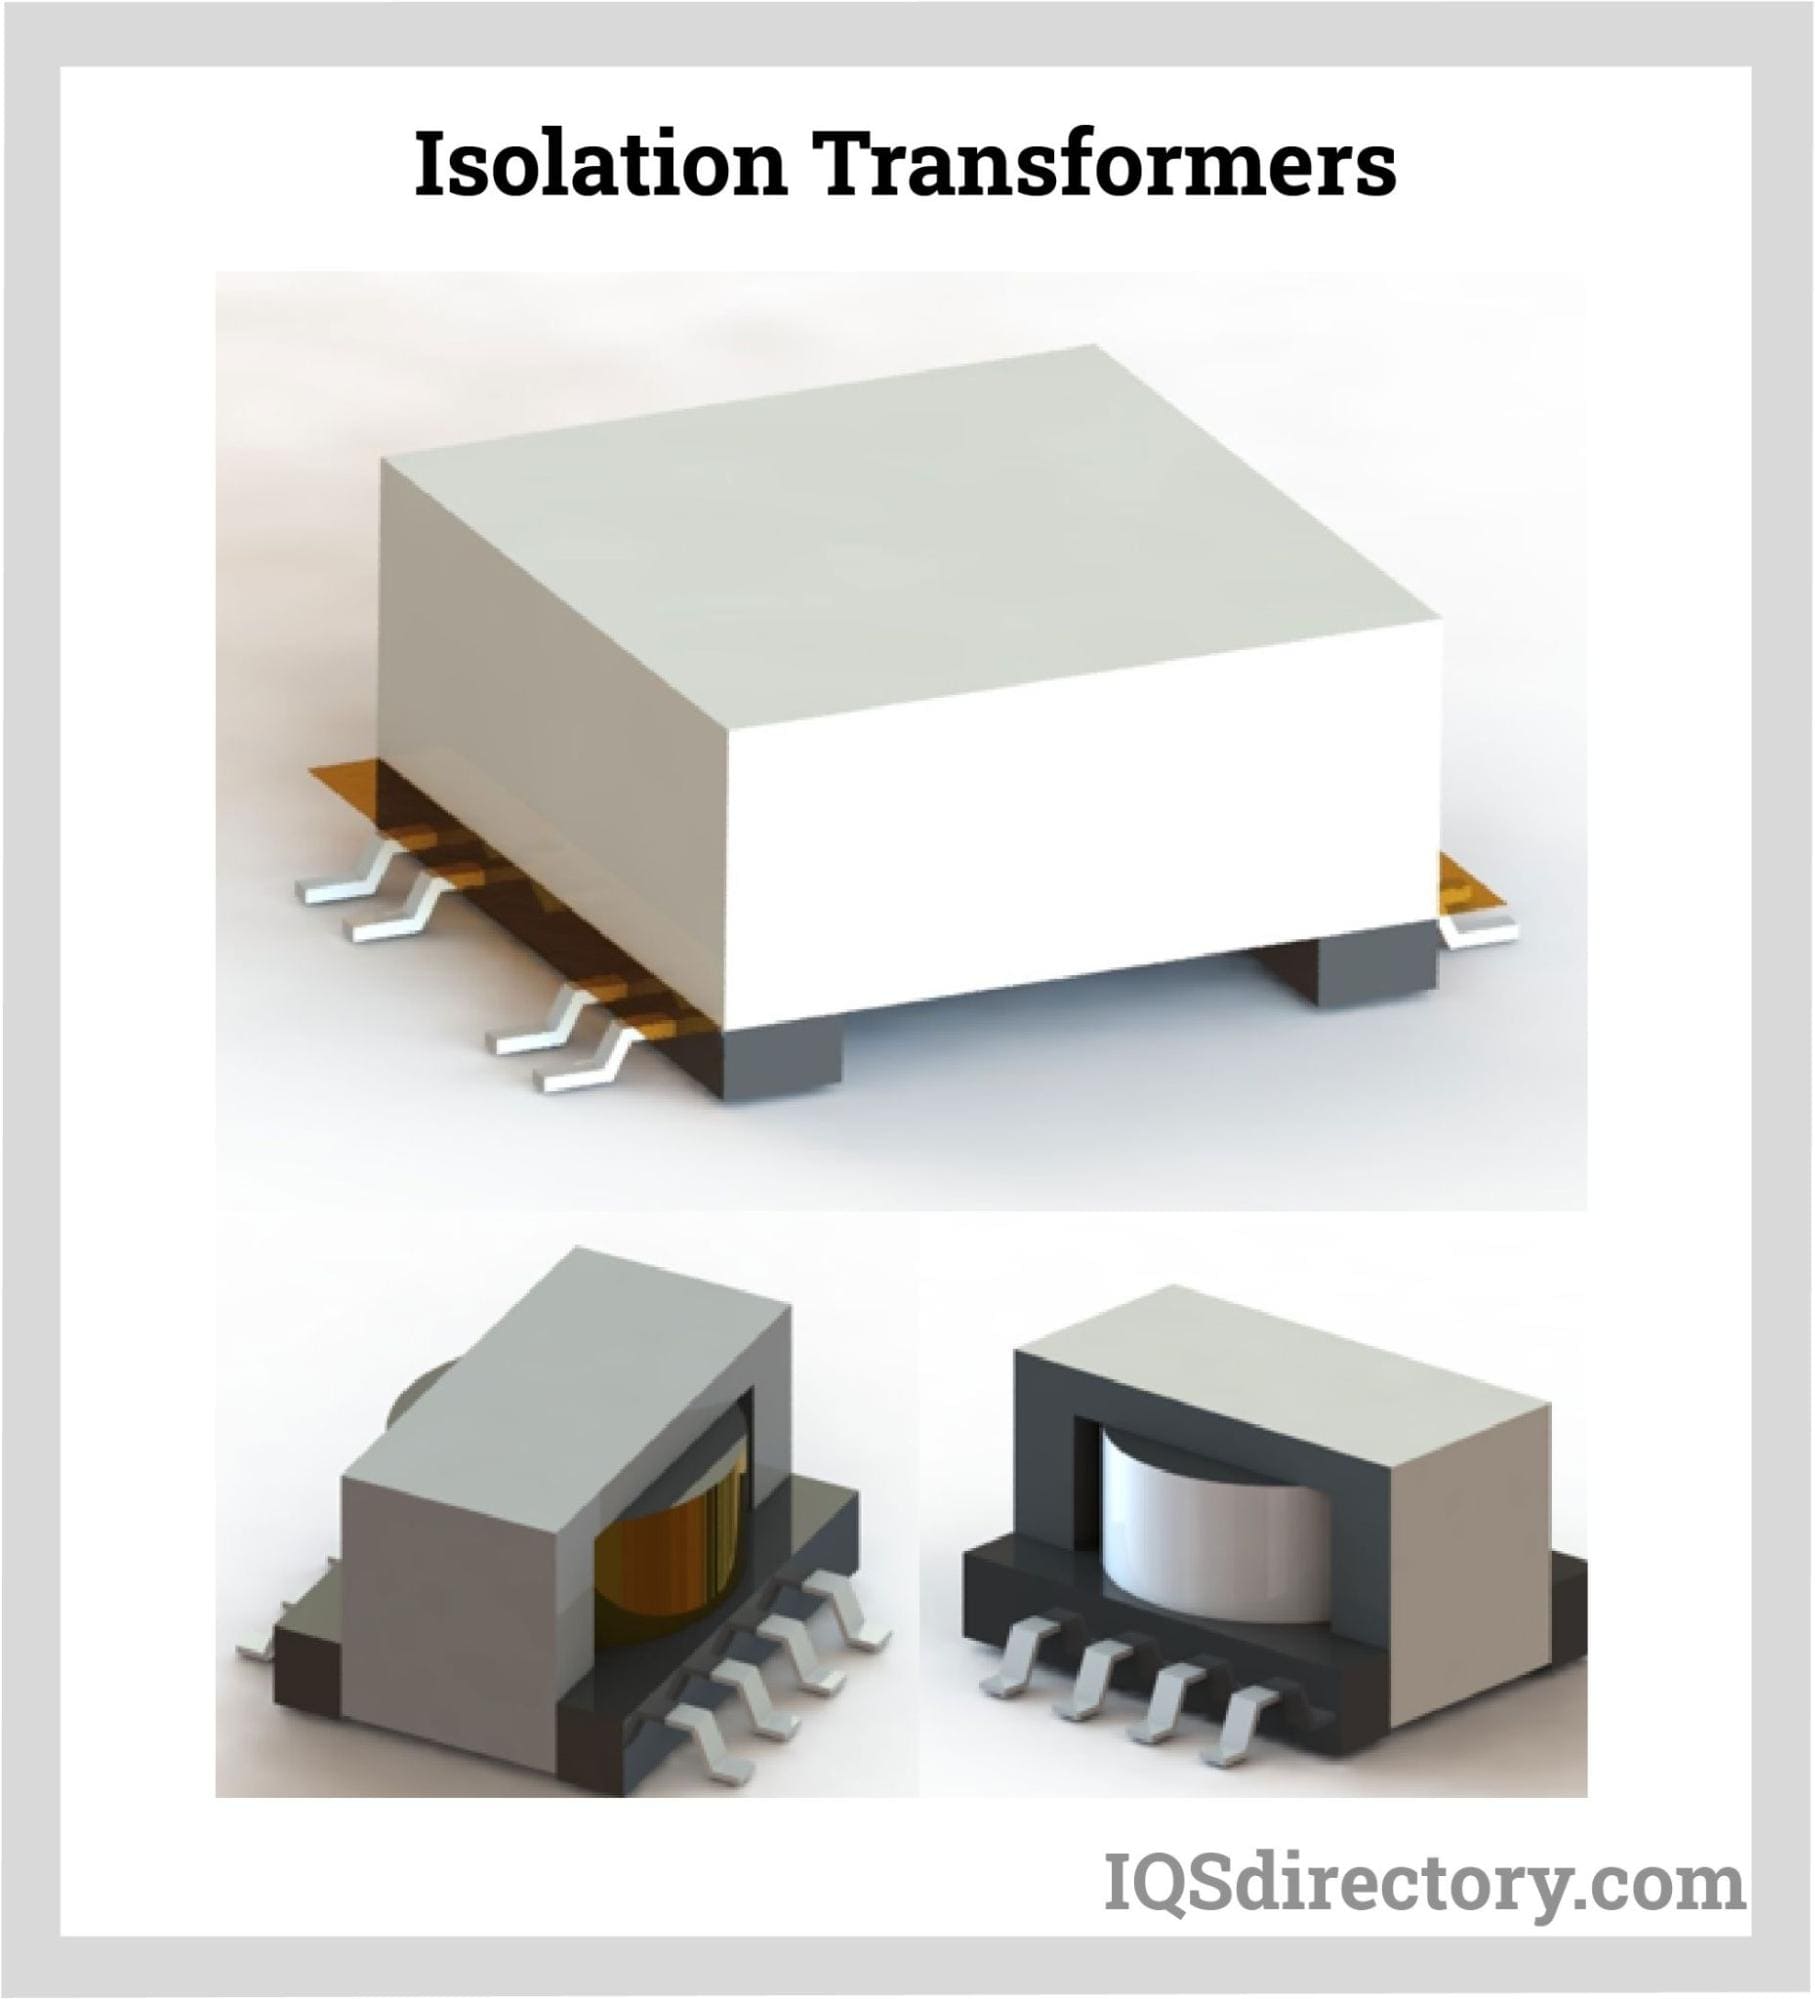 Isolation Transformers